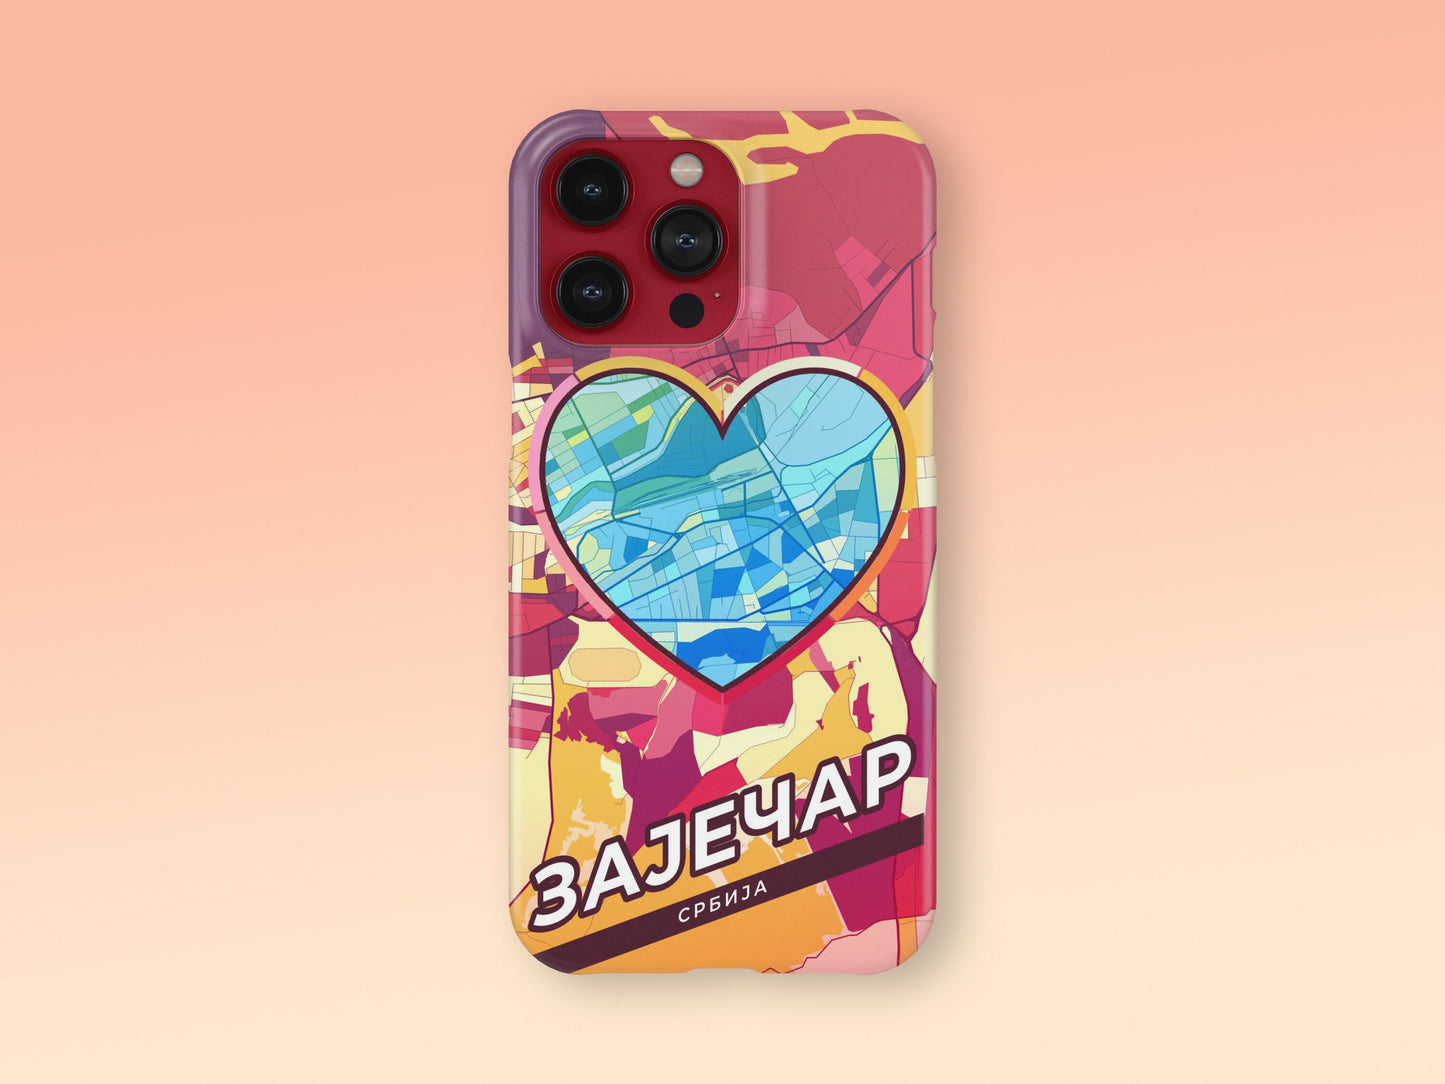 Zaječar Serbia slim phone case with colorful icon 2